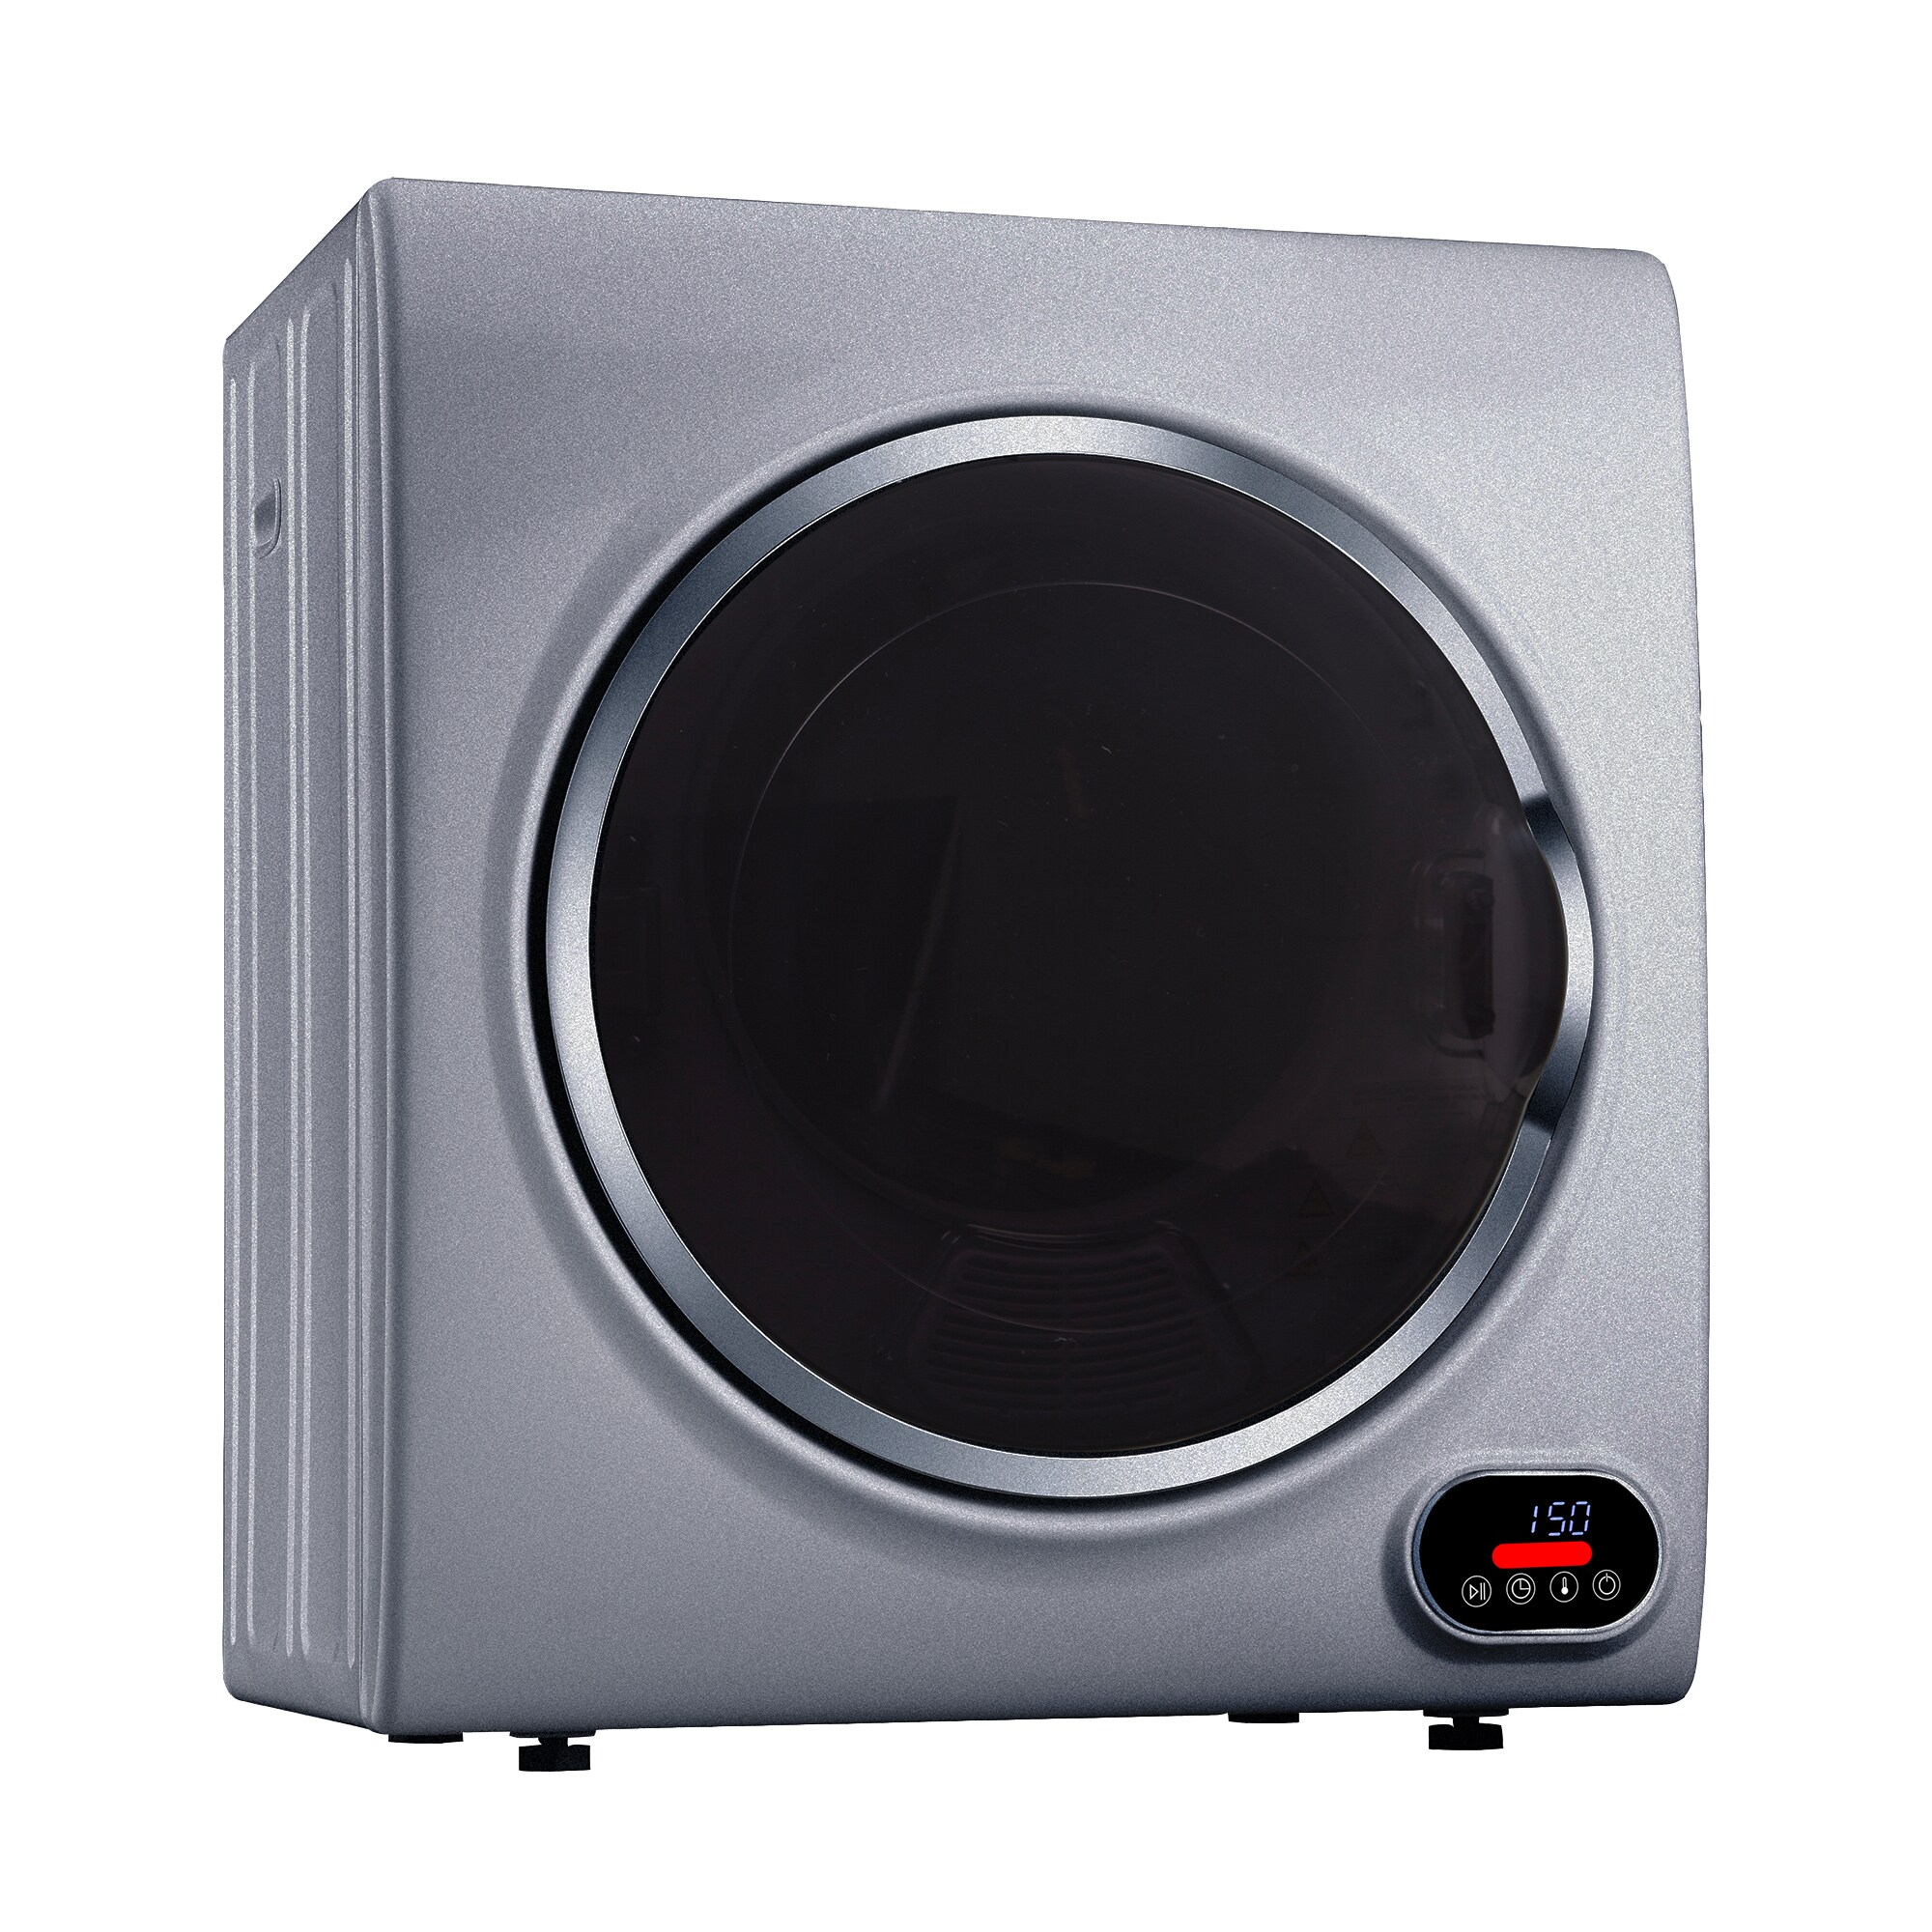  Clothes Dryer 110v-240v Foldable Electric Portable